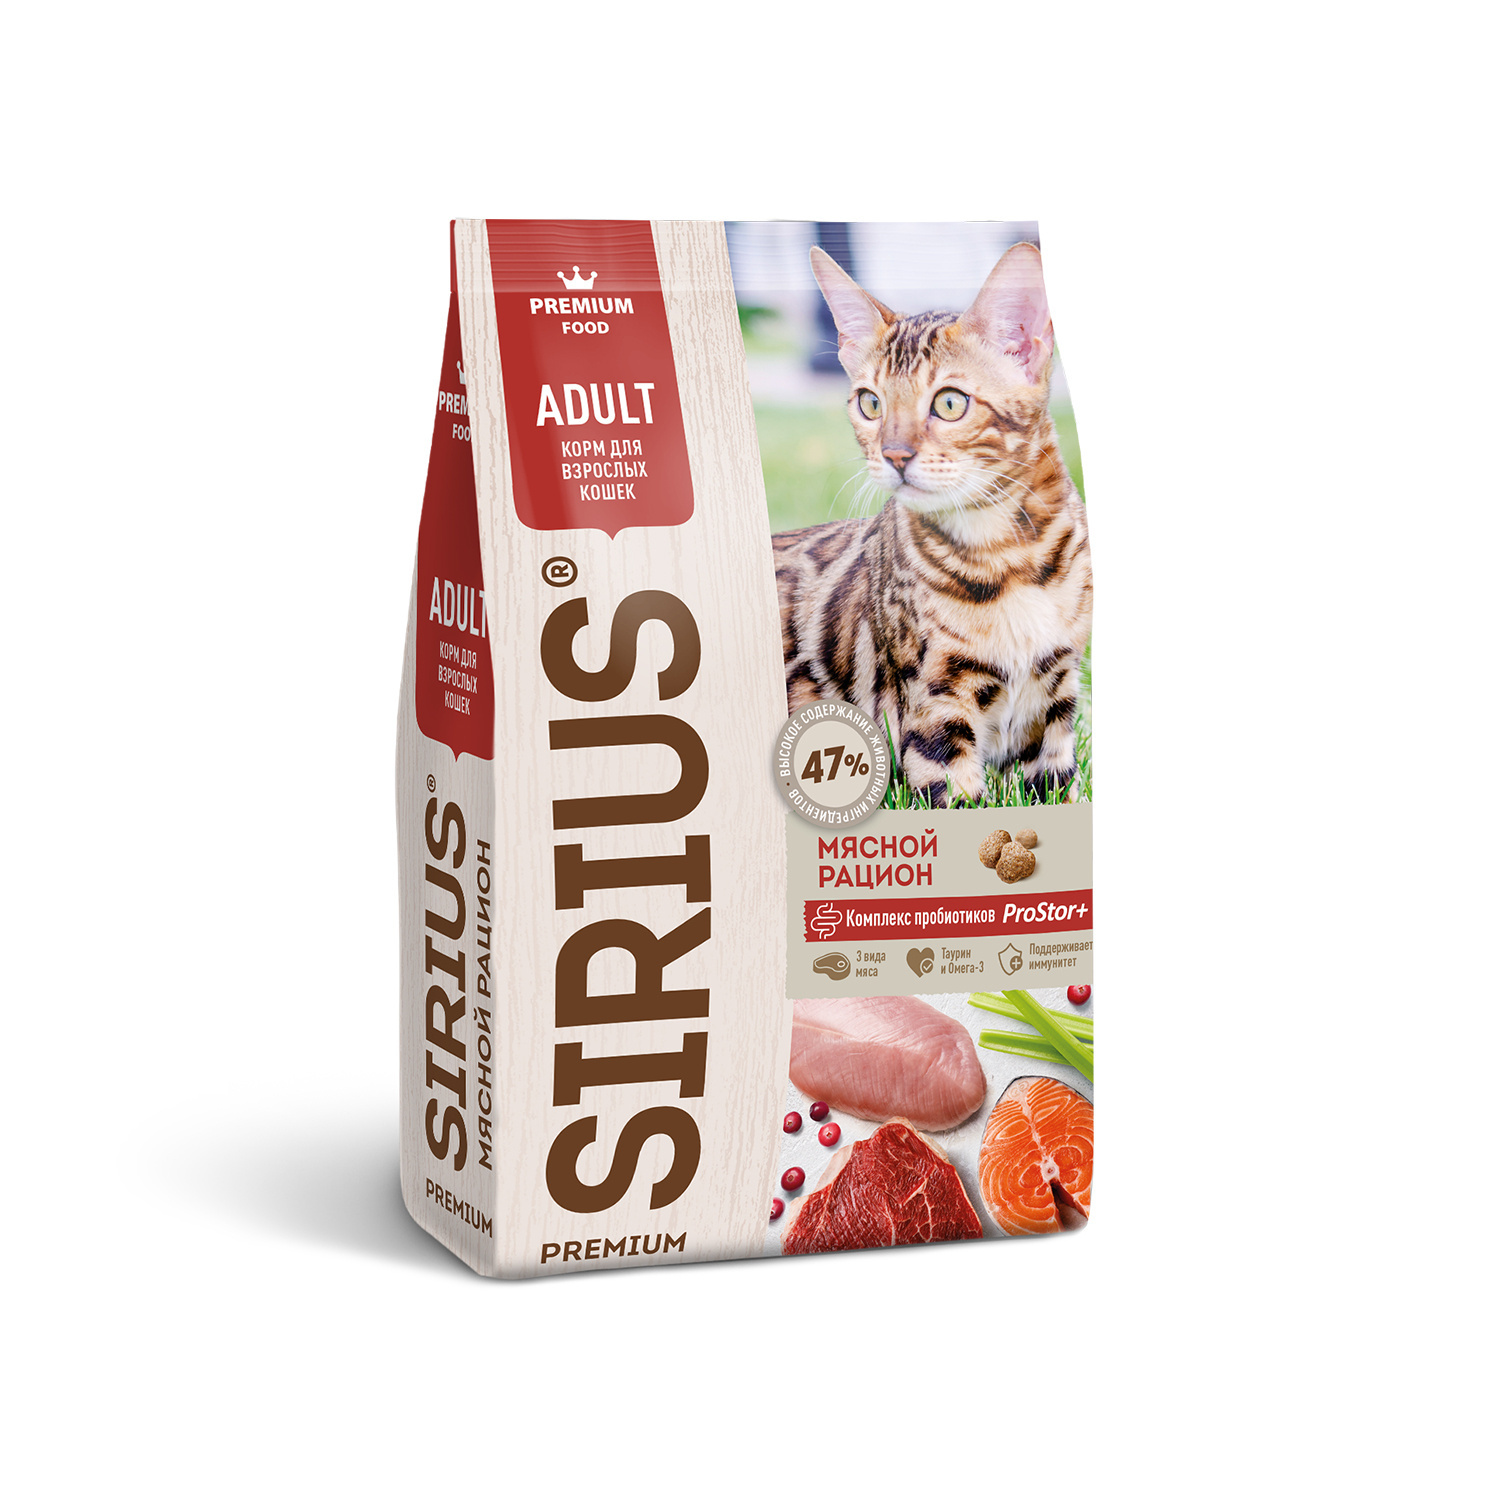 Sirius Sirius сухой корм для кошек, мясной рацион (1,5 кг)